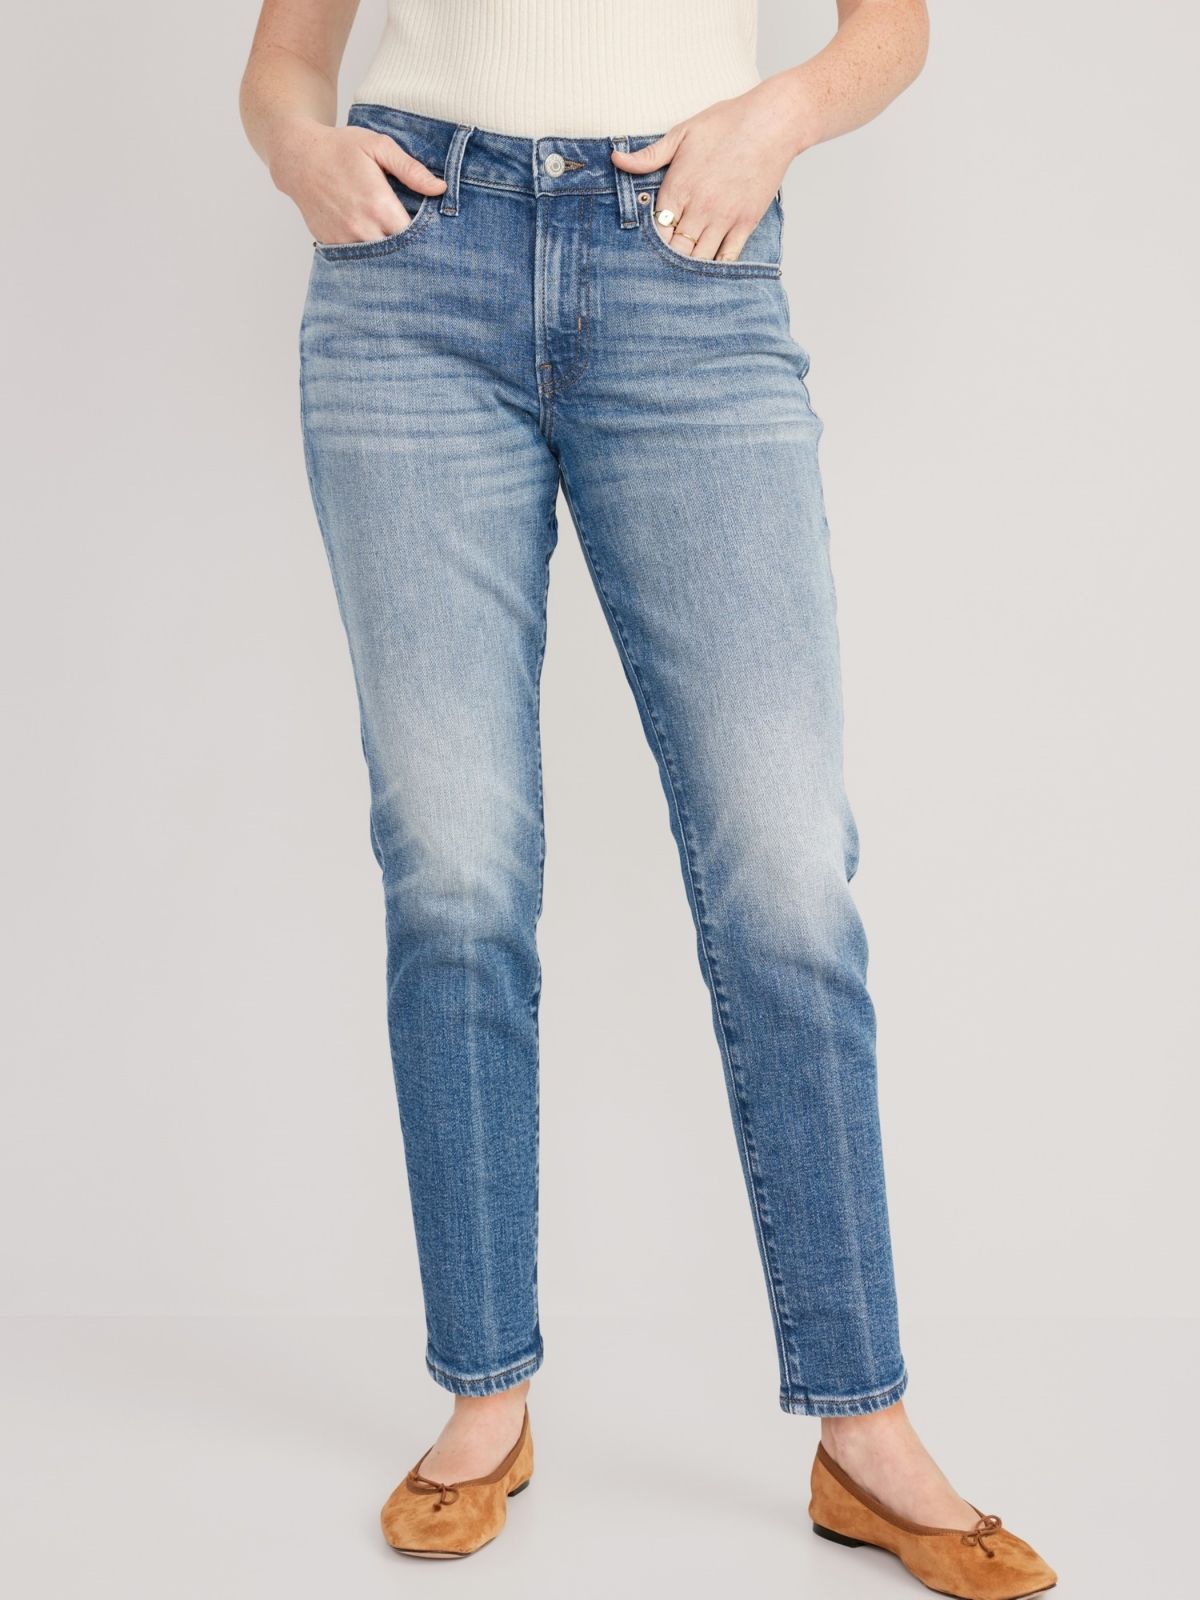  ג'ינס ווש בגזרה ישרה של OLD NAVY